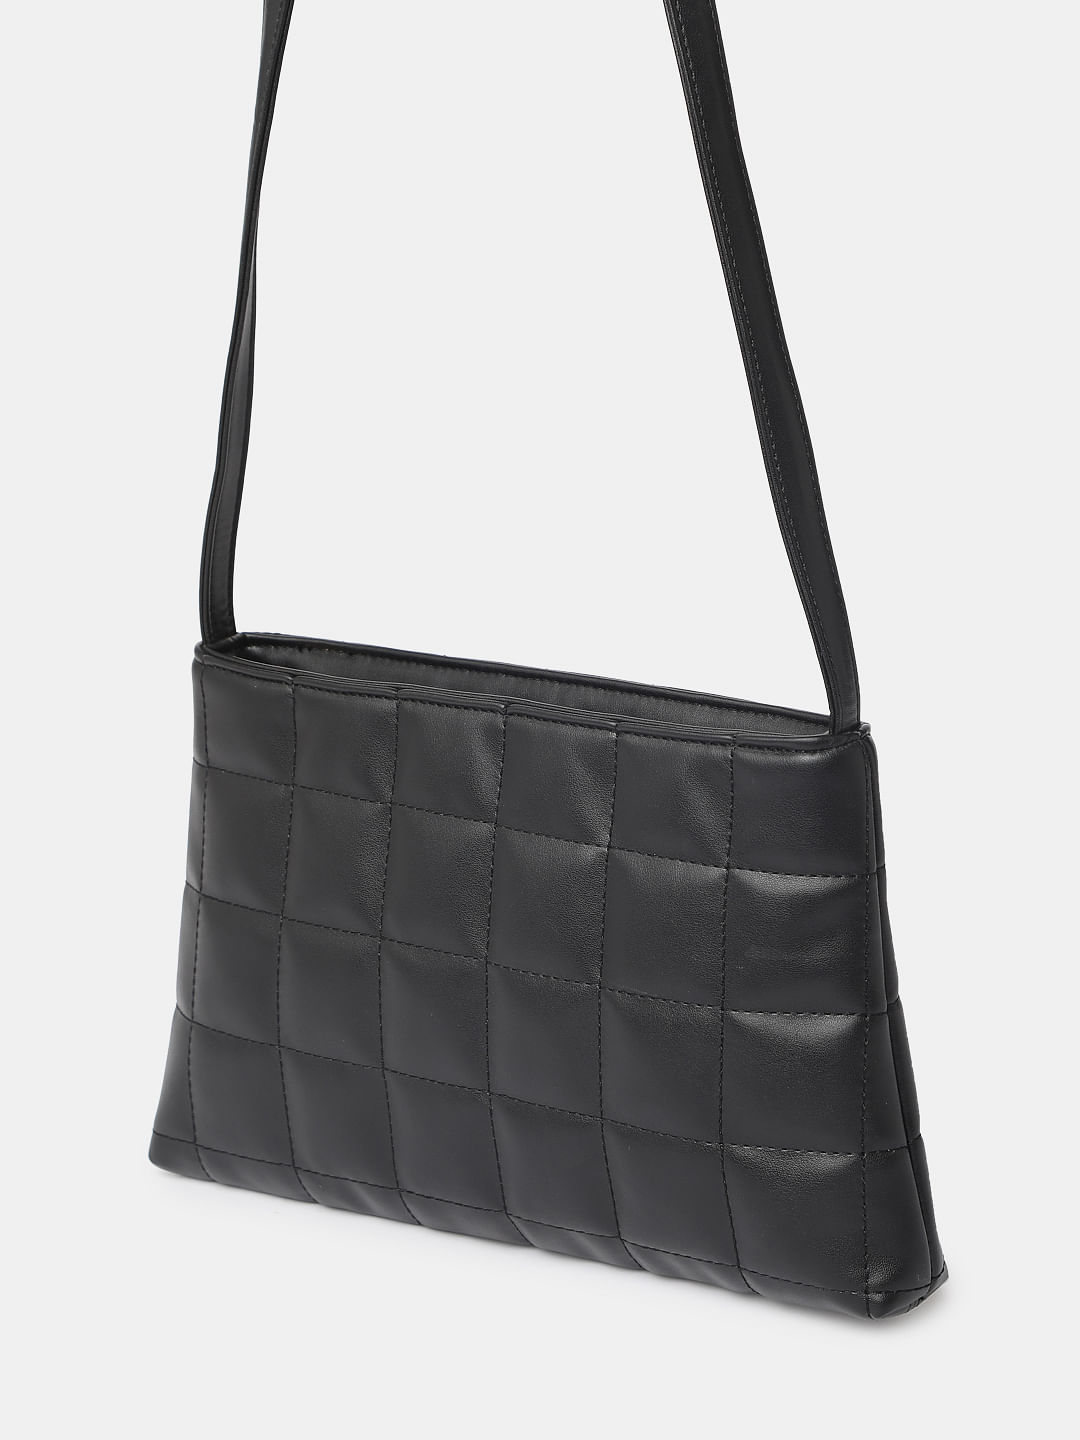 LIKE STYLE Black Sling Bag Attractive Printed Formal Sling Bag BLACK -  Price in India | Flipkart.com